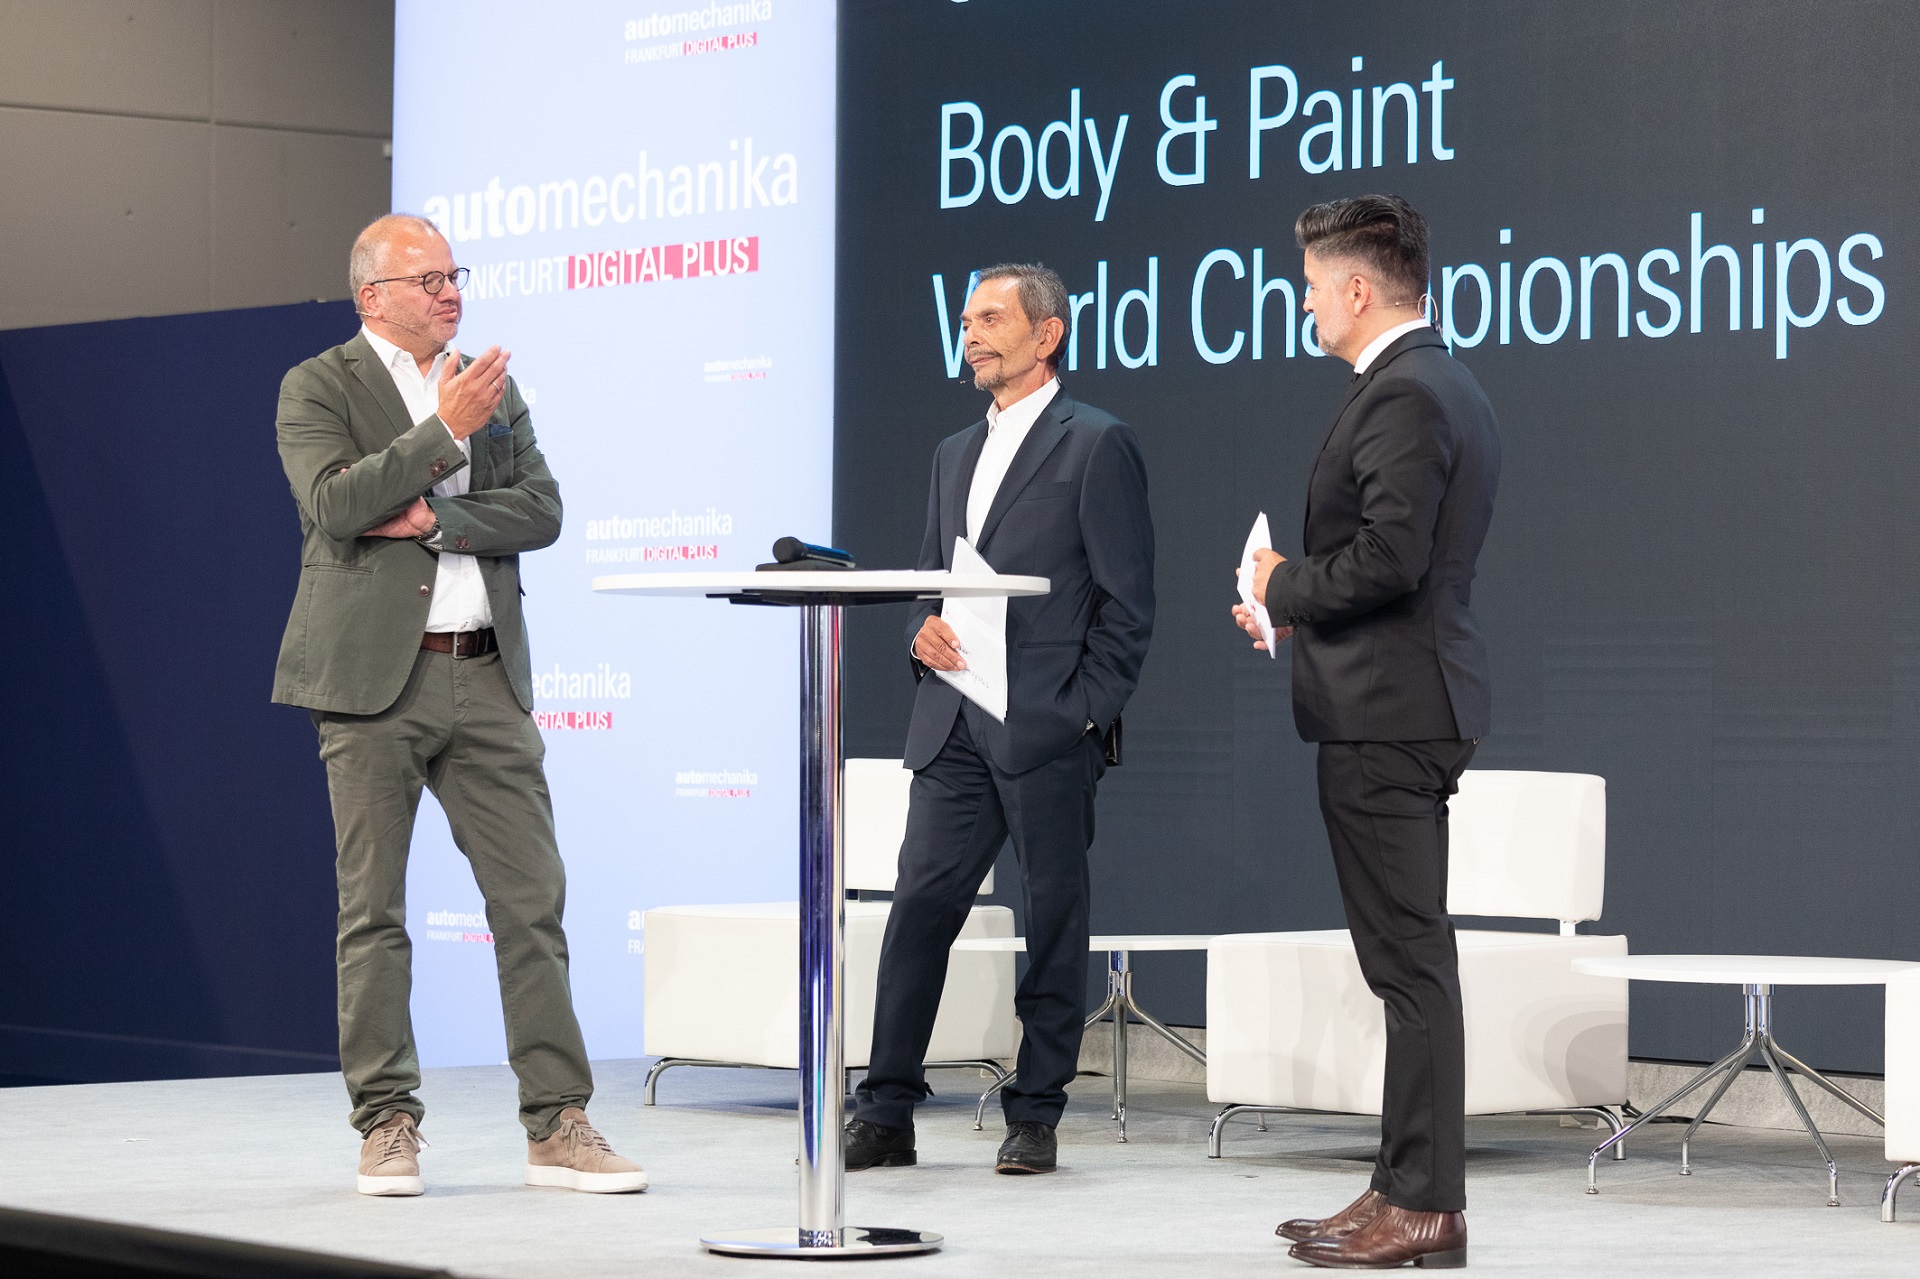 Body & Paint World Championships in Frankfurt